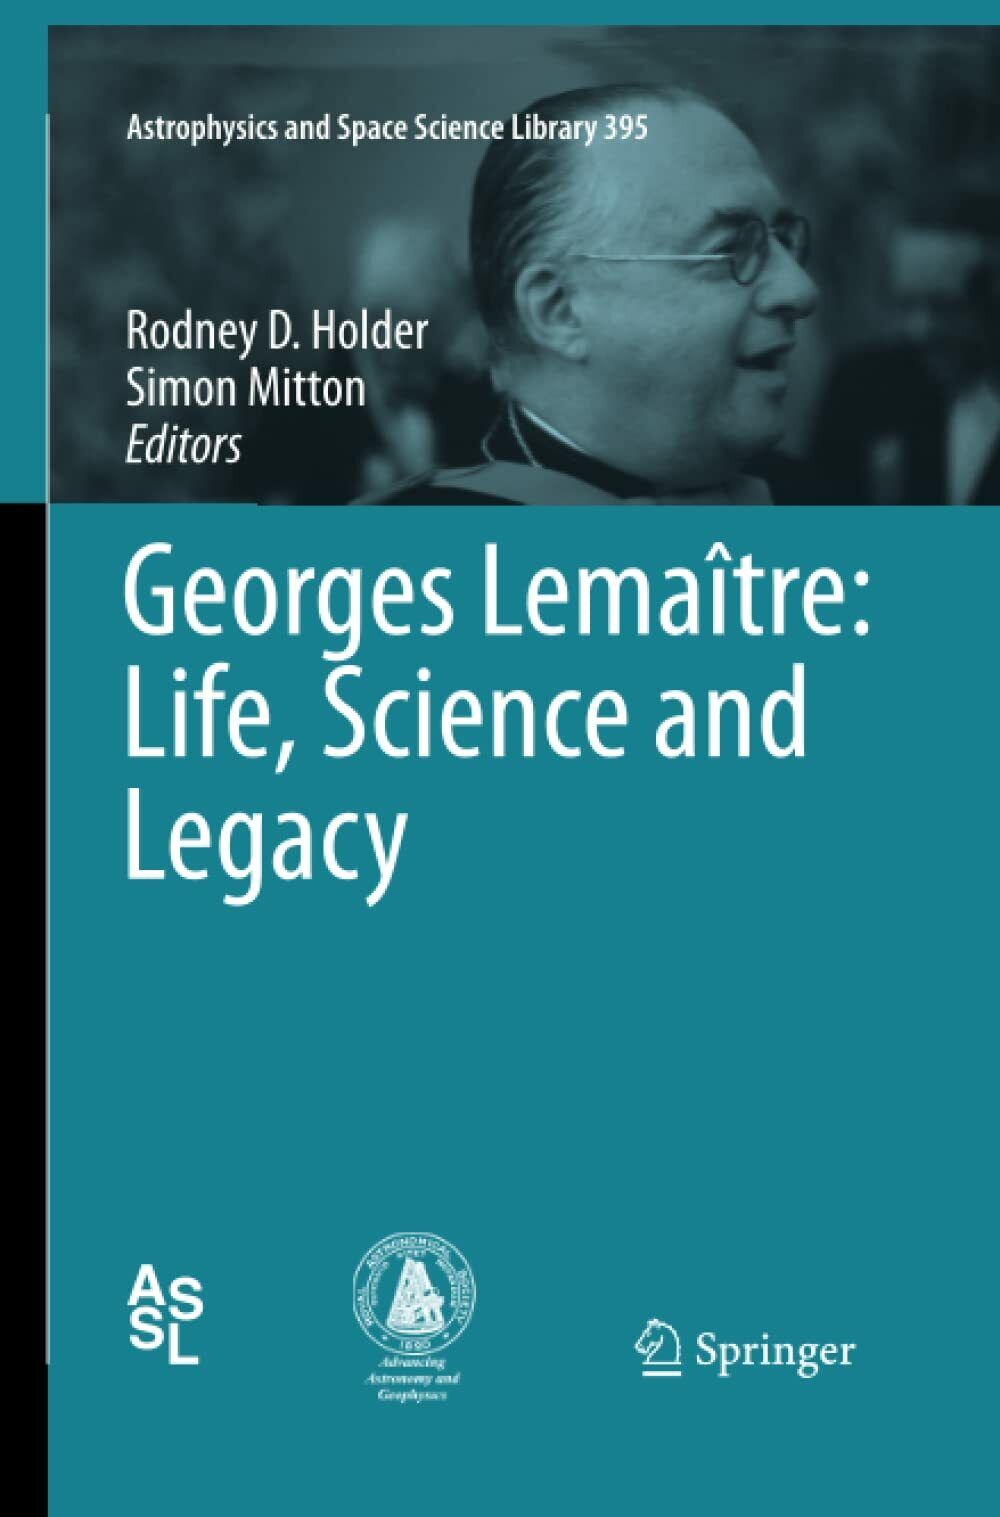 Georges Lema?tre: Life, Science and Legacy - Rodney D. Holder  - Springer, 2015